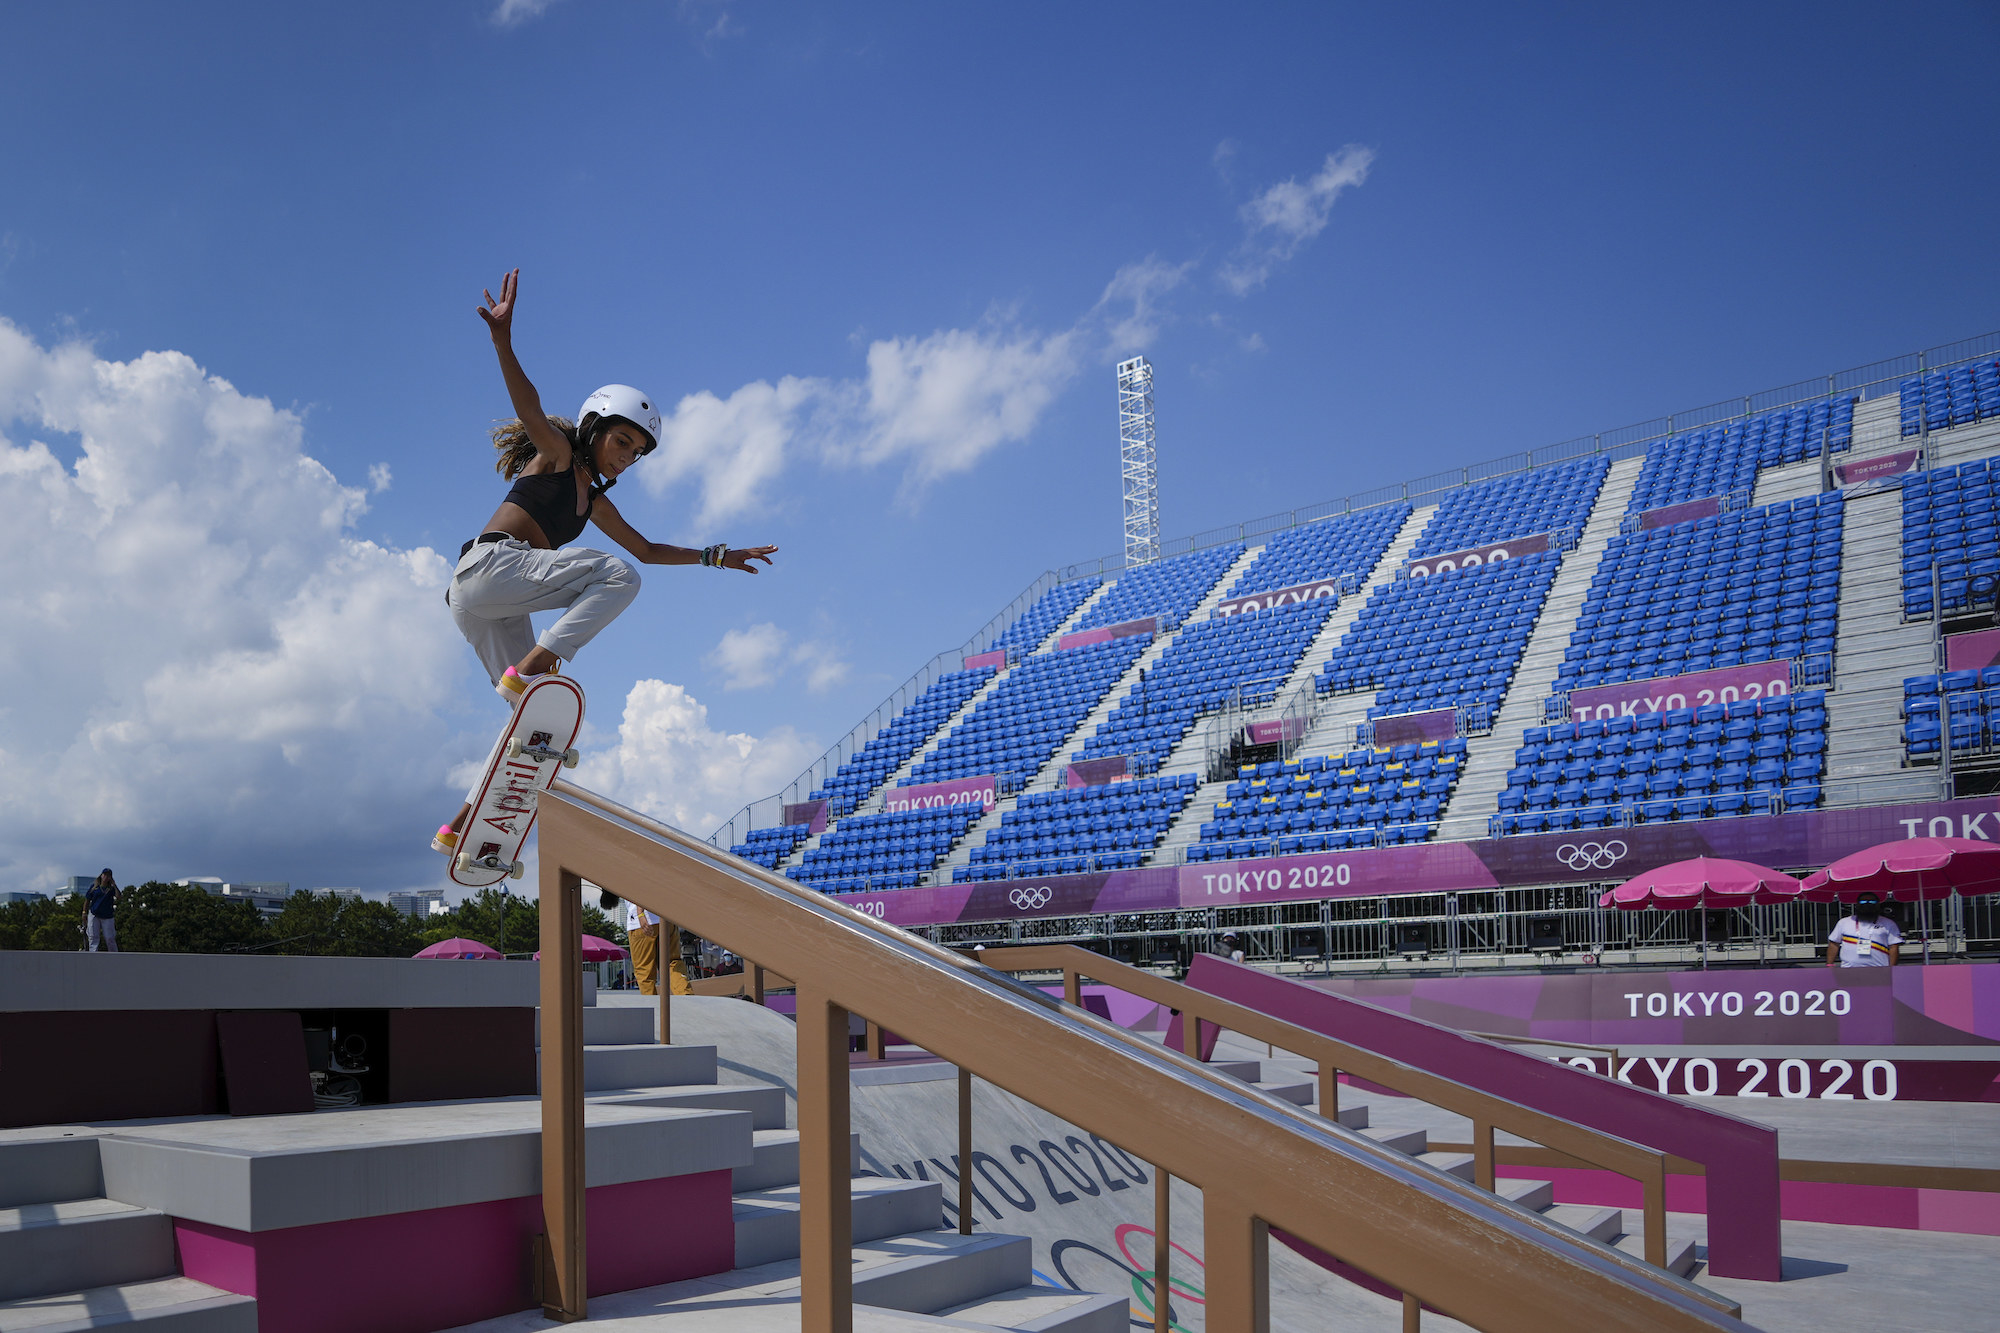 A helmeted Rayssa skateboarding down a stair handrail, arms raised